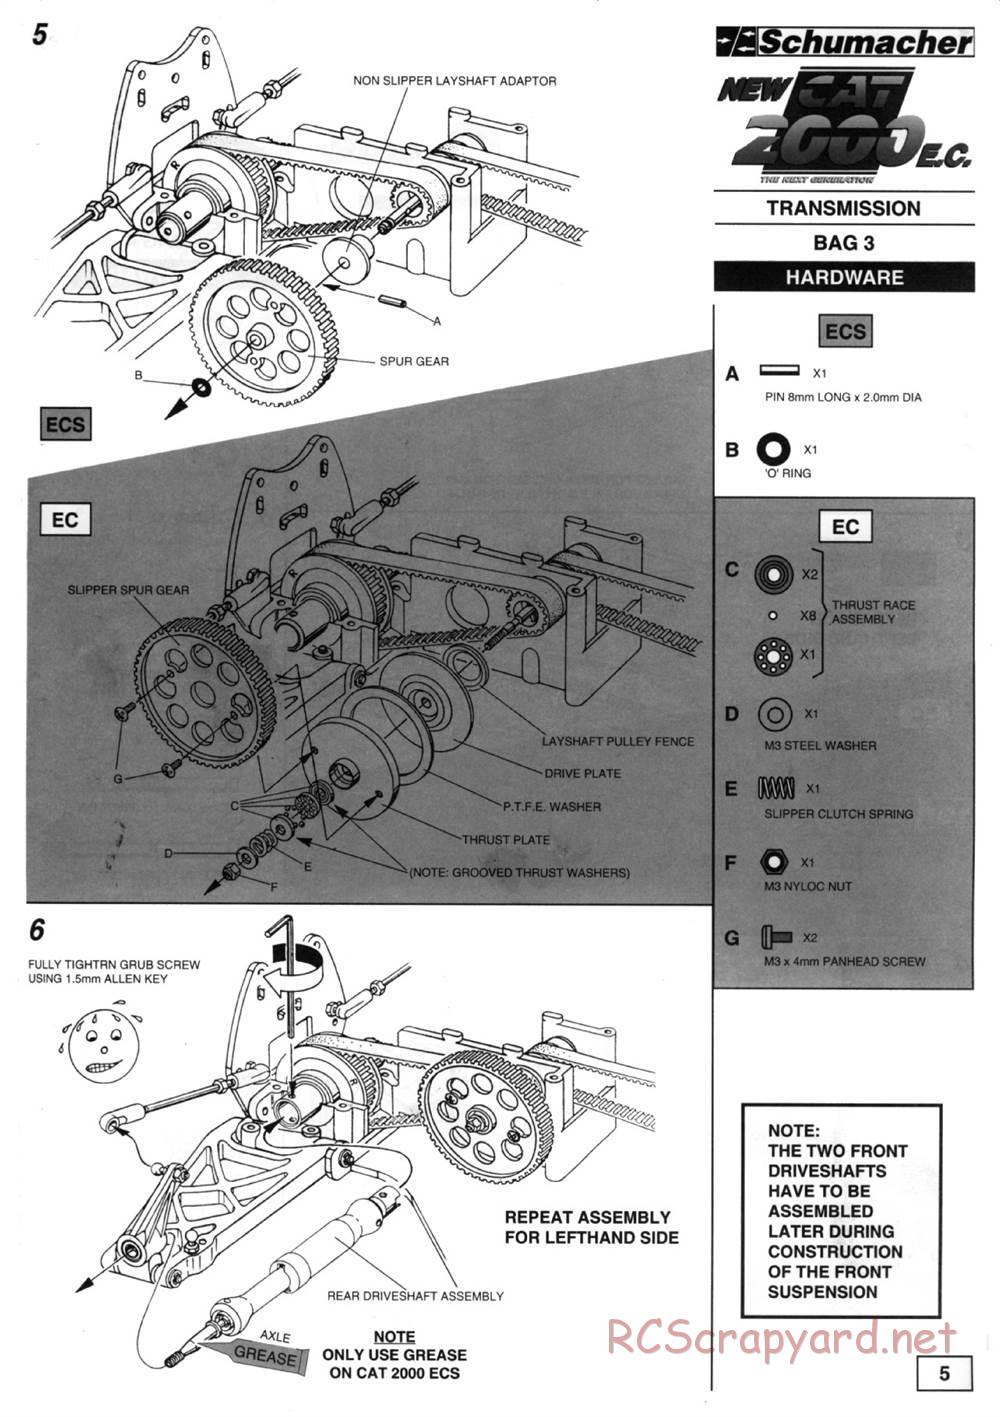 Schumacher - Cat 2000 EC - Manual - Page 7